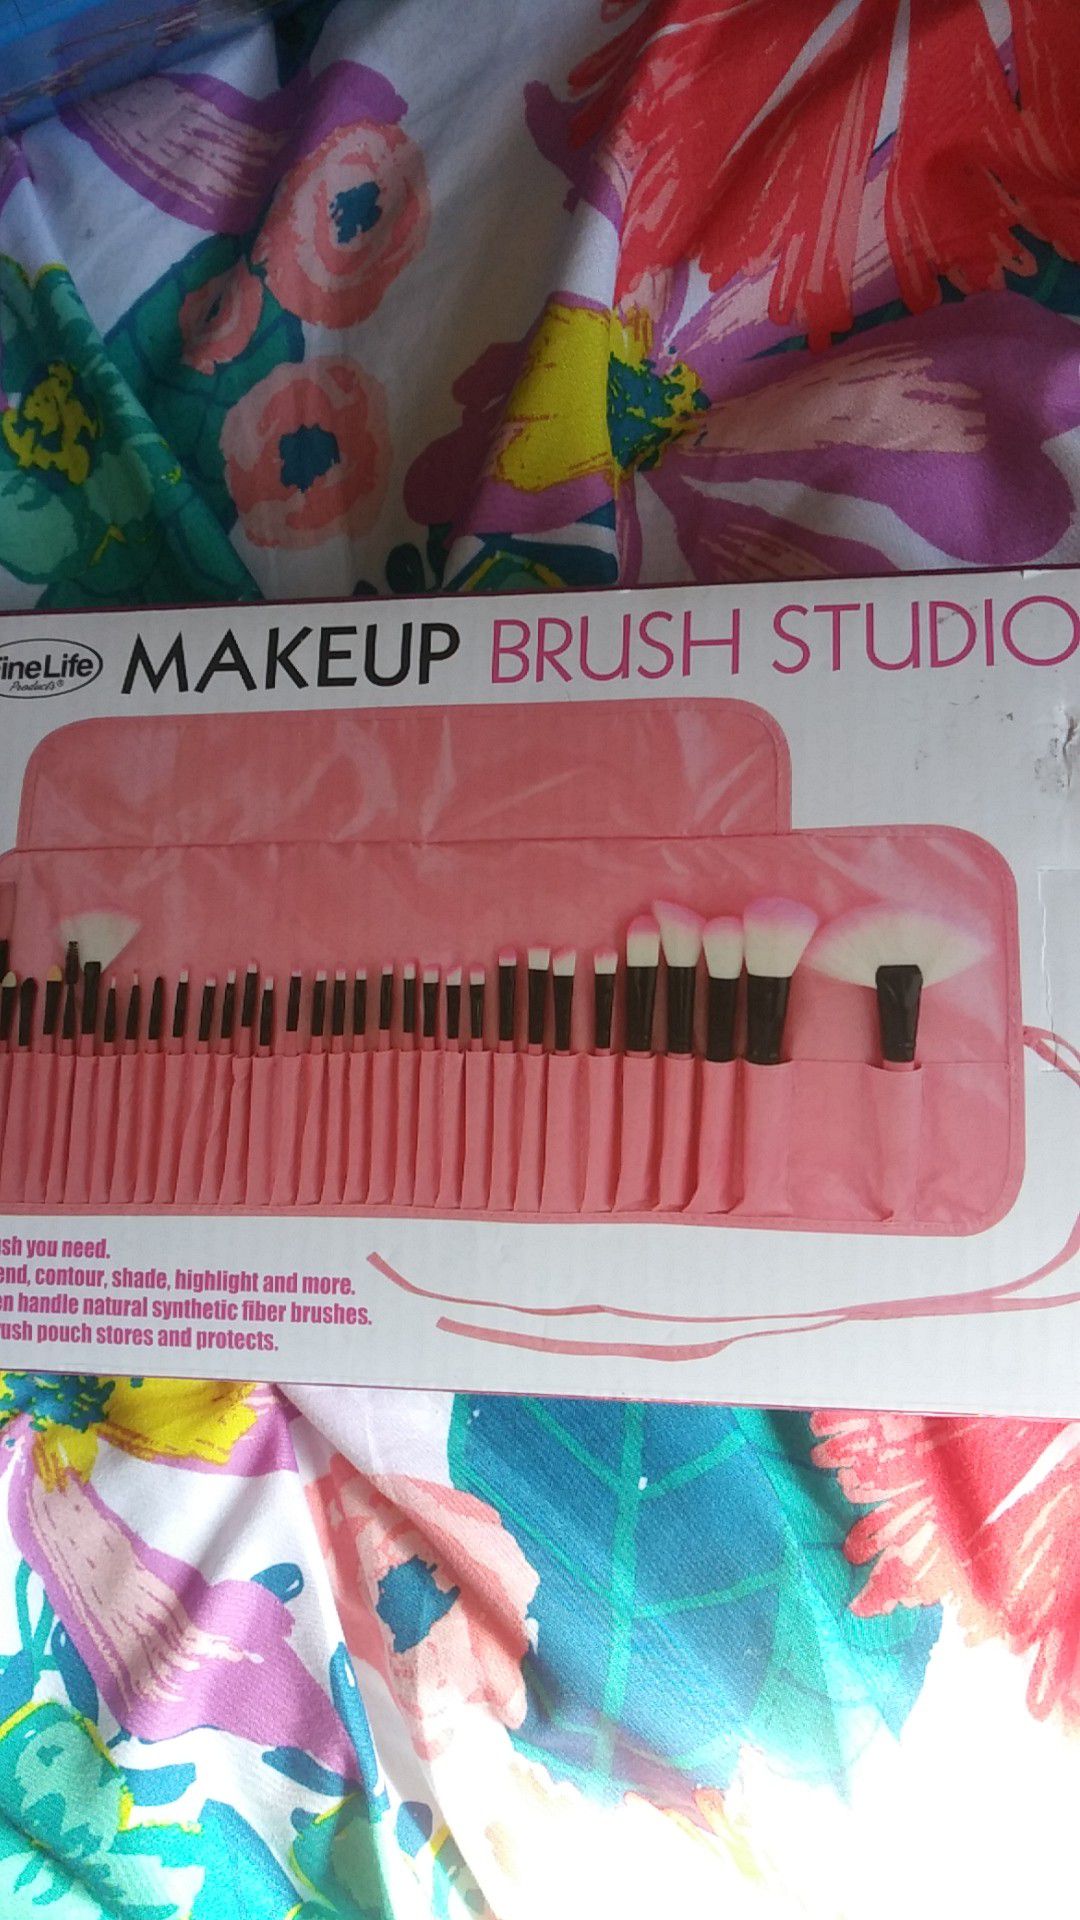 Brand new 32-piece makeup brush Studio with case